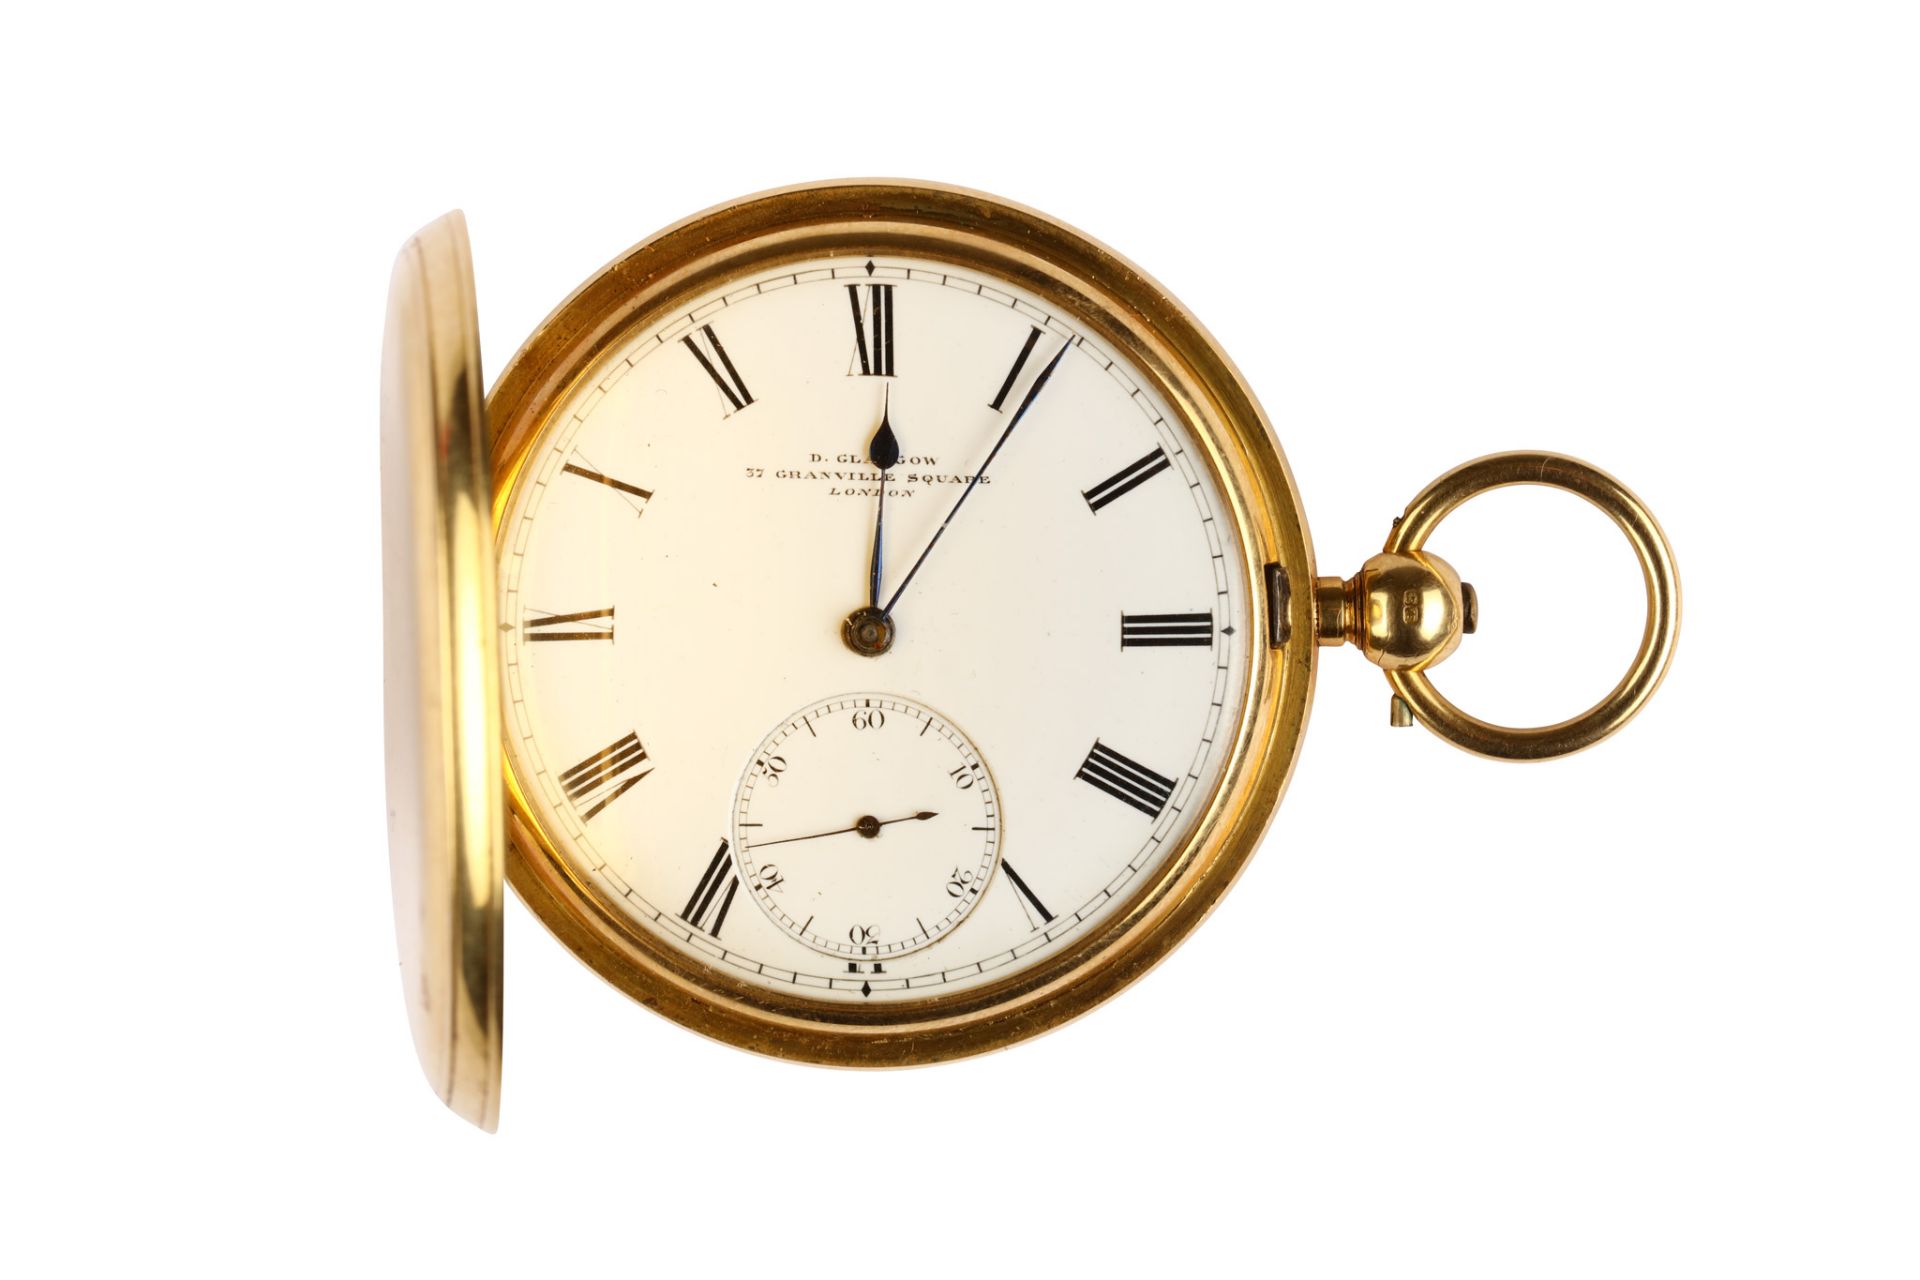 D.Glasgow. An 18K gold full hunter pocket watch. Date: 1869. Movement: Signed, three quarter